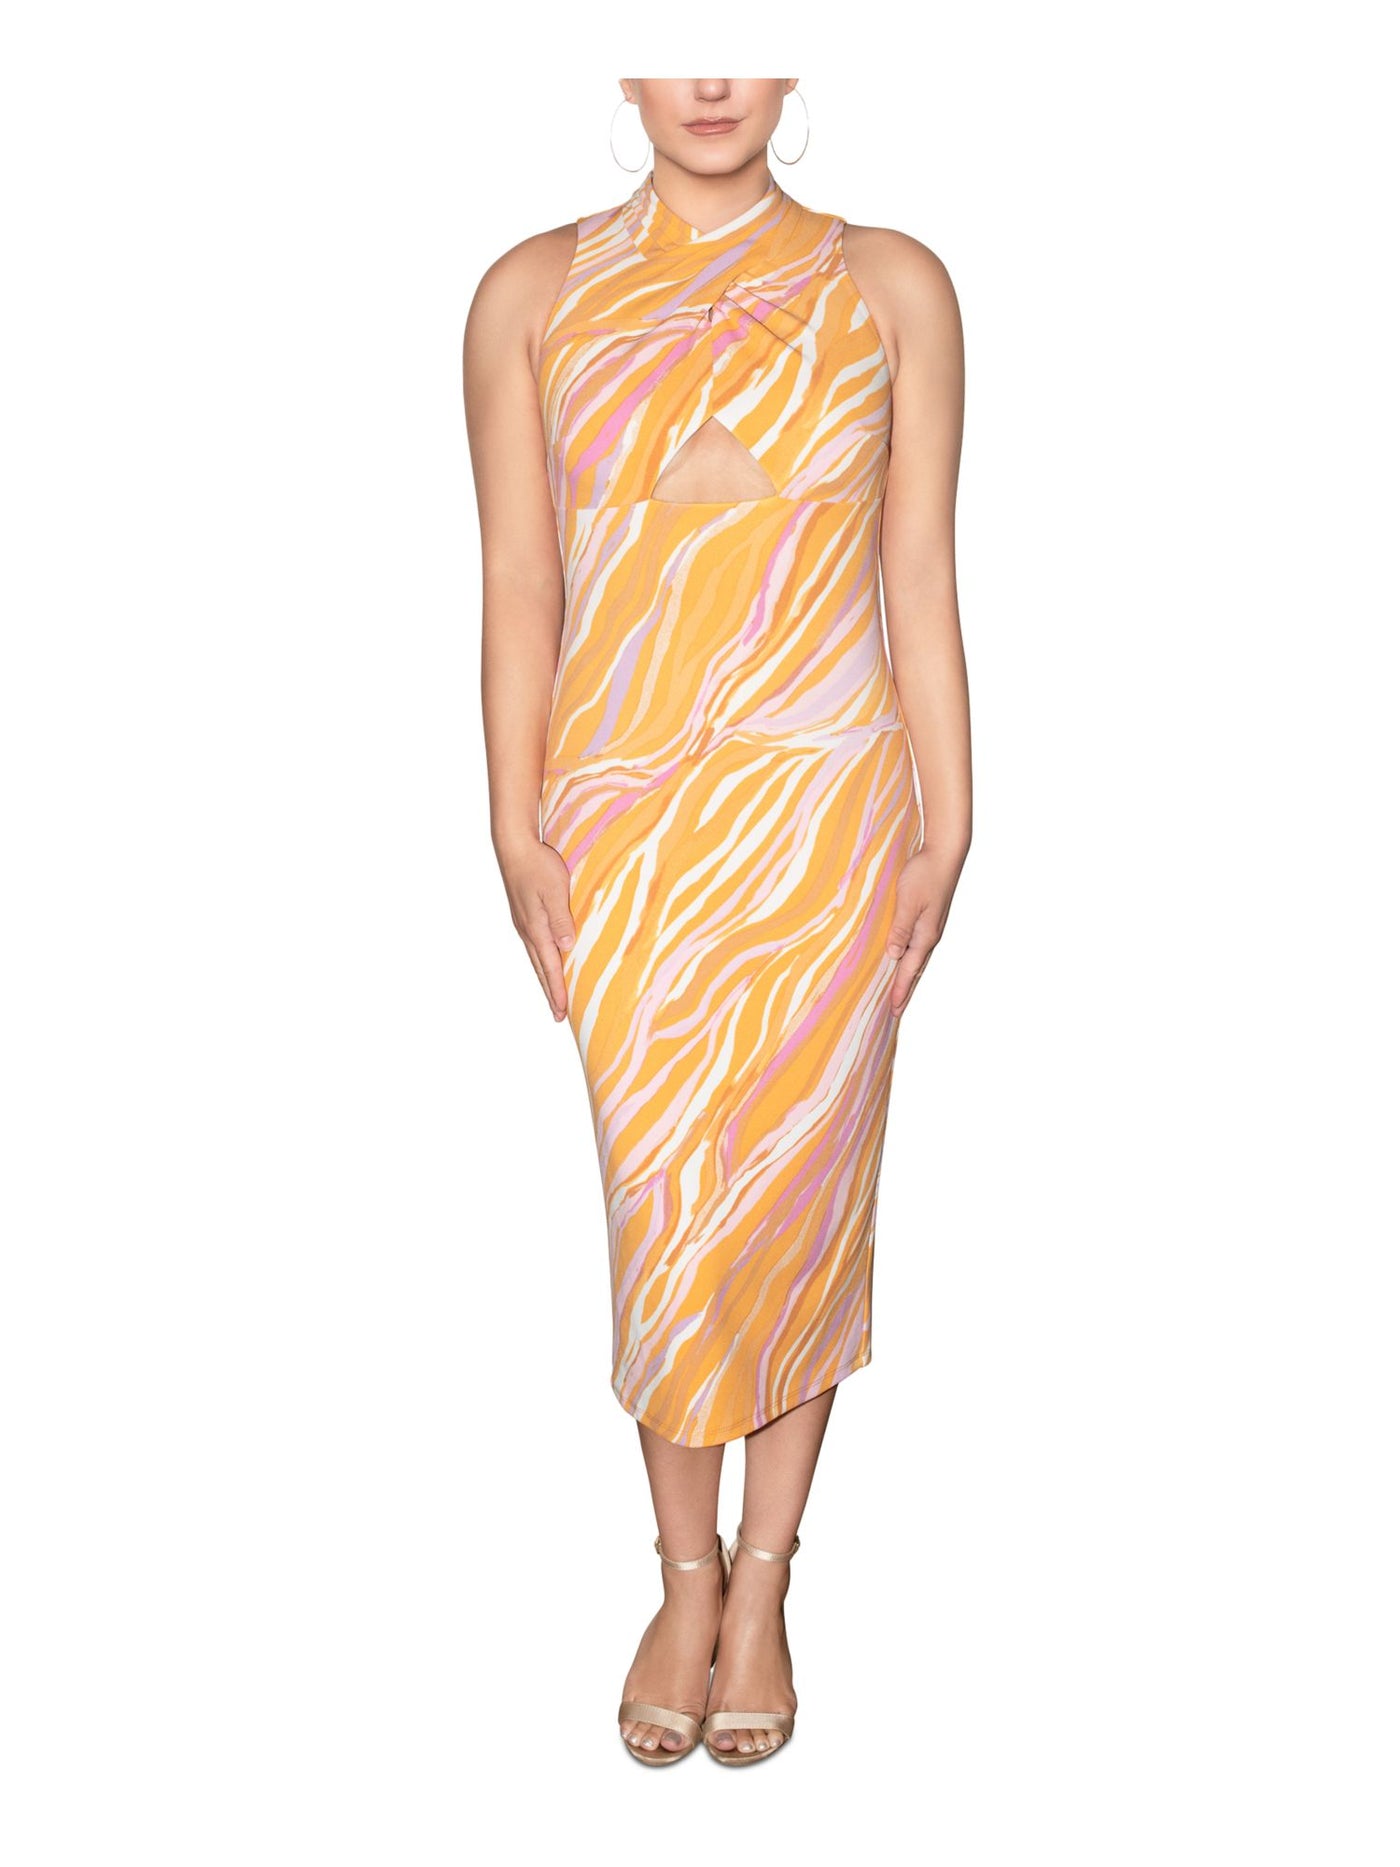 RACHEL RACHEL ROY Womens Orange Zippered Cut Out Pleated Crossover Printed Sleeveless Mock Neck Midi Evening Sheath Dress S